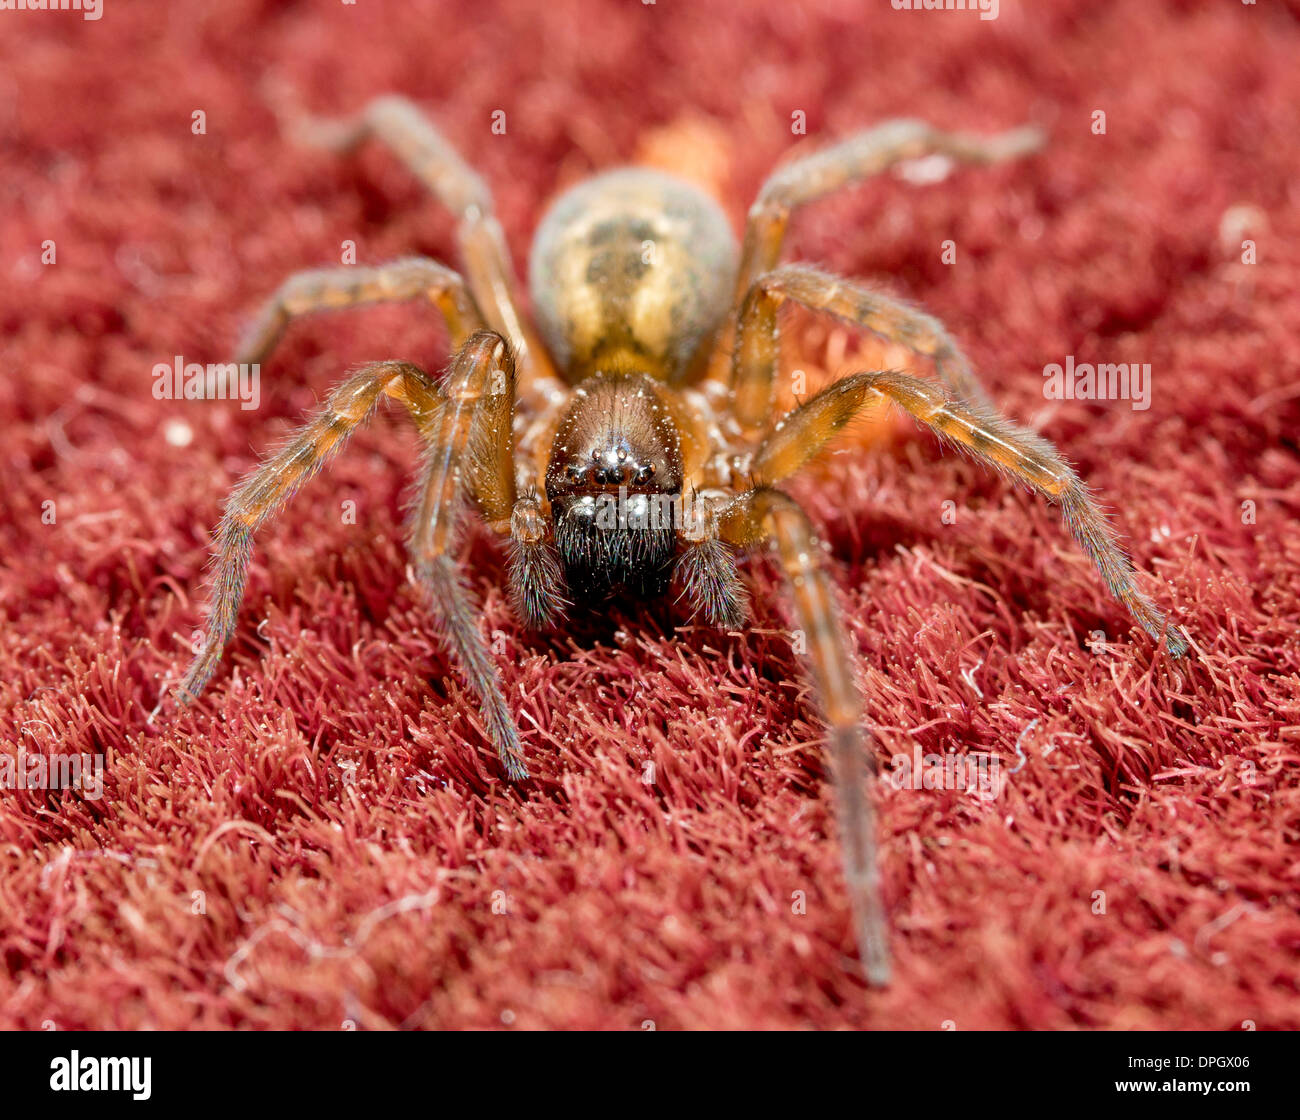 A common house spider walking on a carpet, Parasteatoda tepidariorum Stock Photo